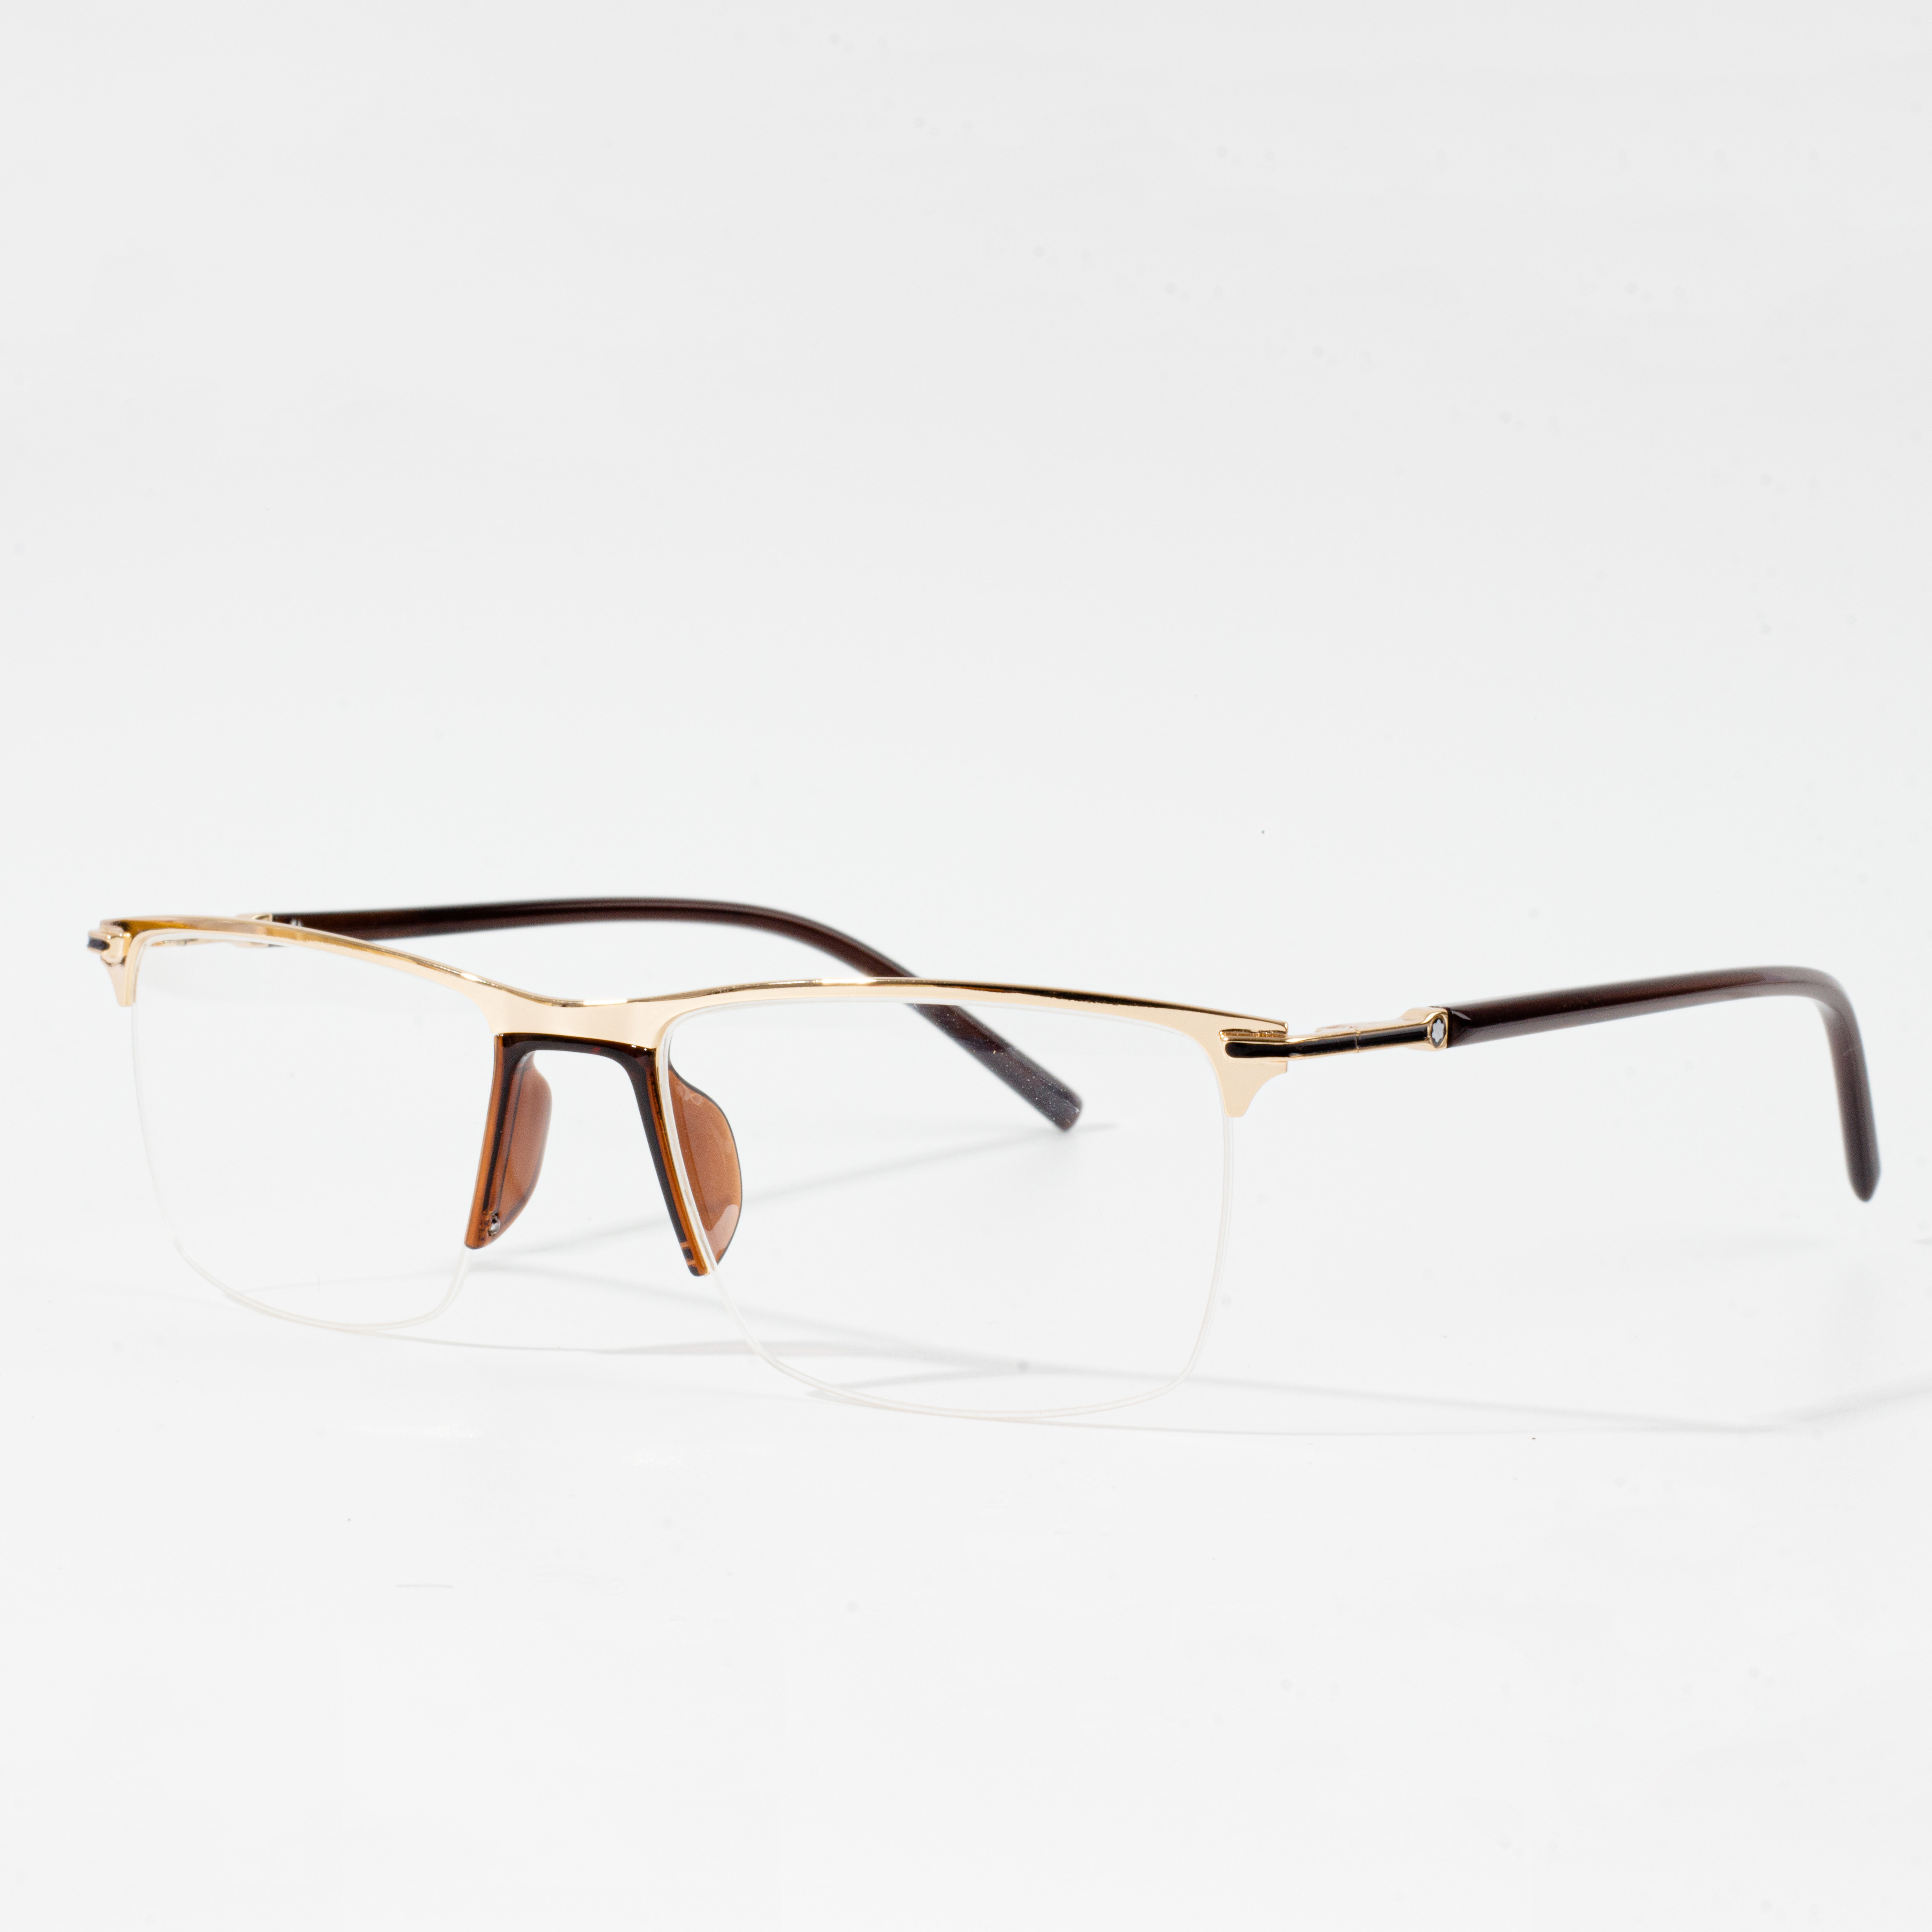 mutambo Optical Eyeglasses Frames